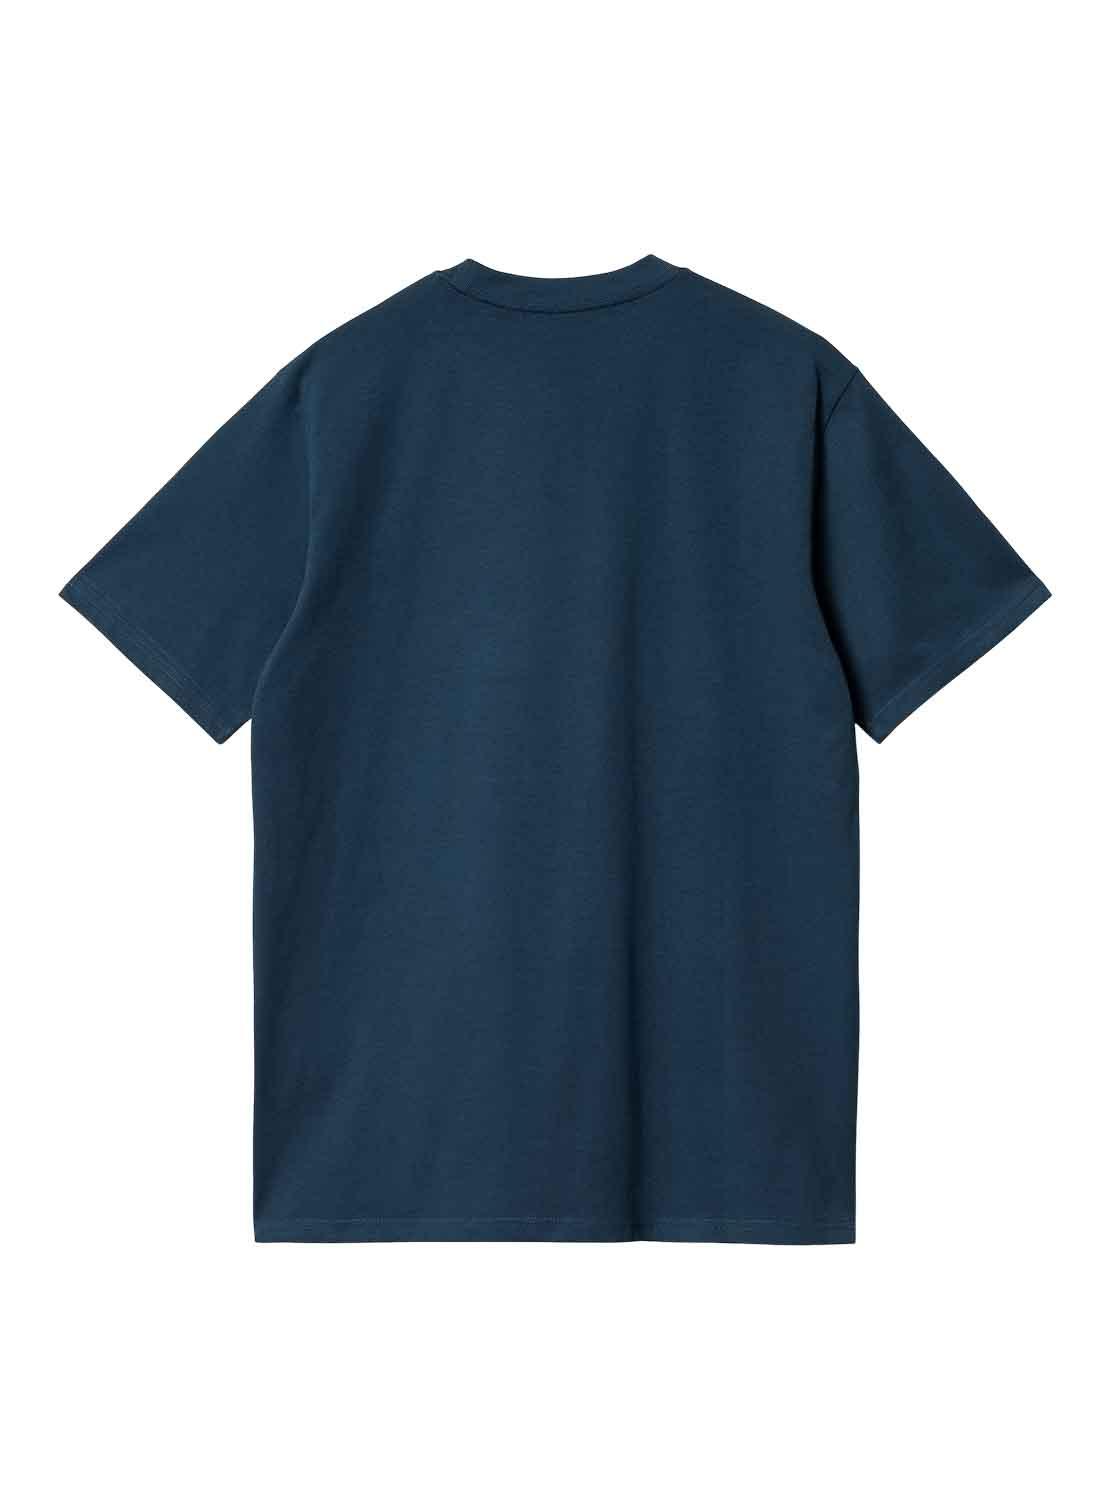 T-Shirt Carhartt Script Blu Navy per Uomo